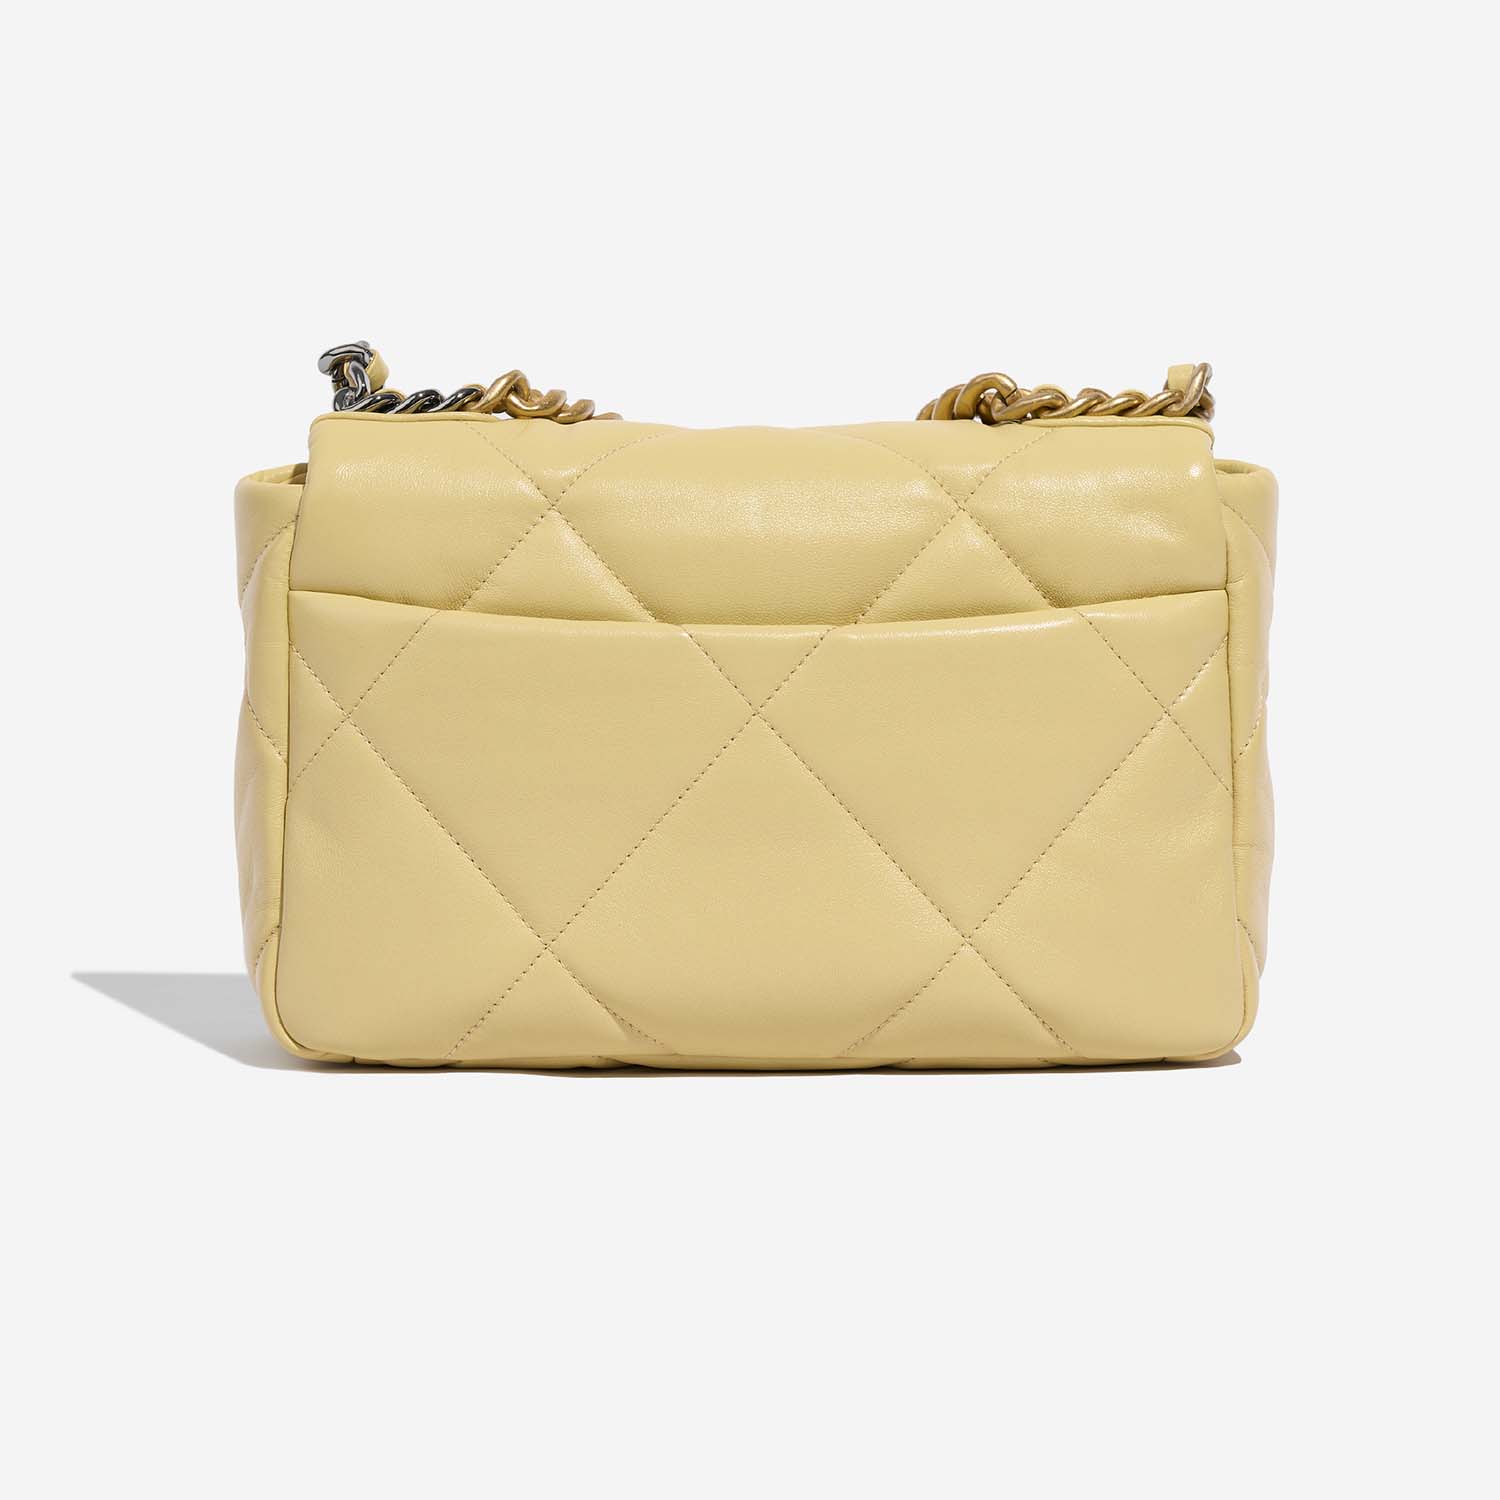 Chanel 19 FlapBag PastelYellow Back  | Sell your designer bag on Saclab.com